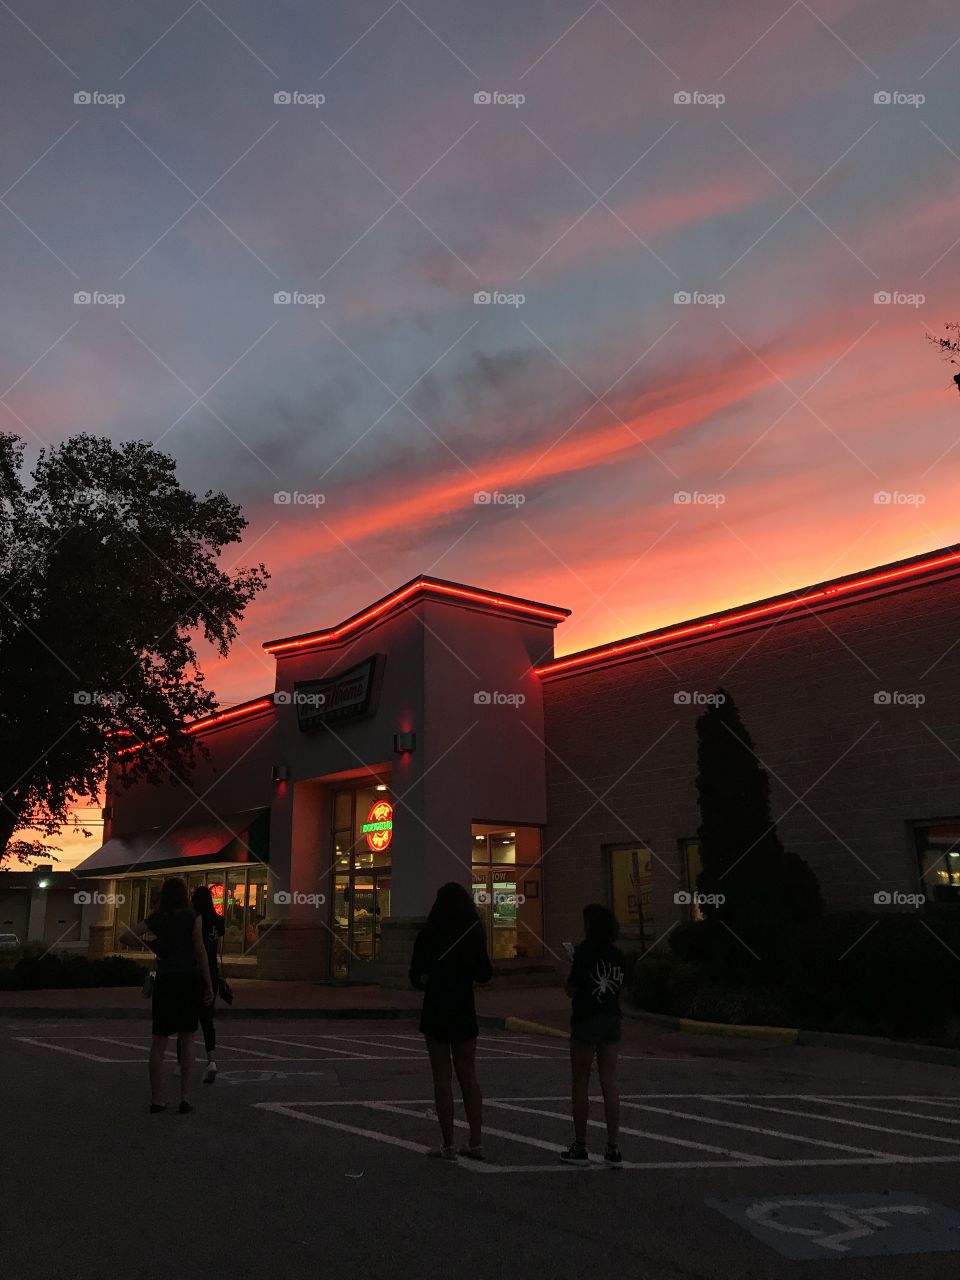 A vibrant sunset over an illuminated Krispy Kreme donut shop